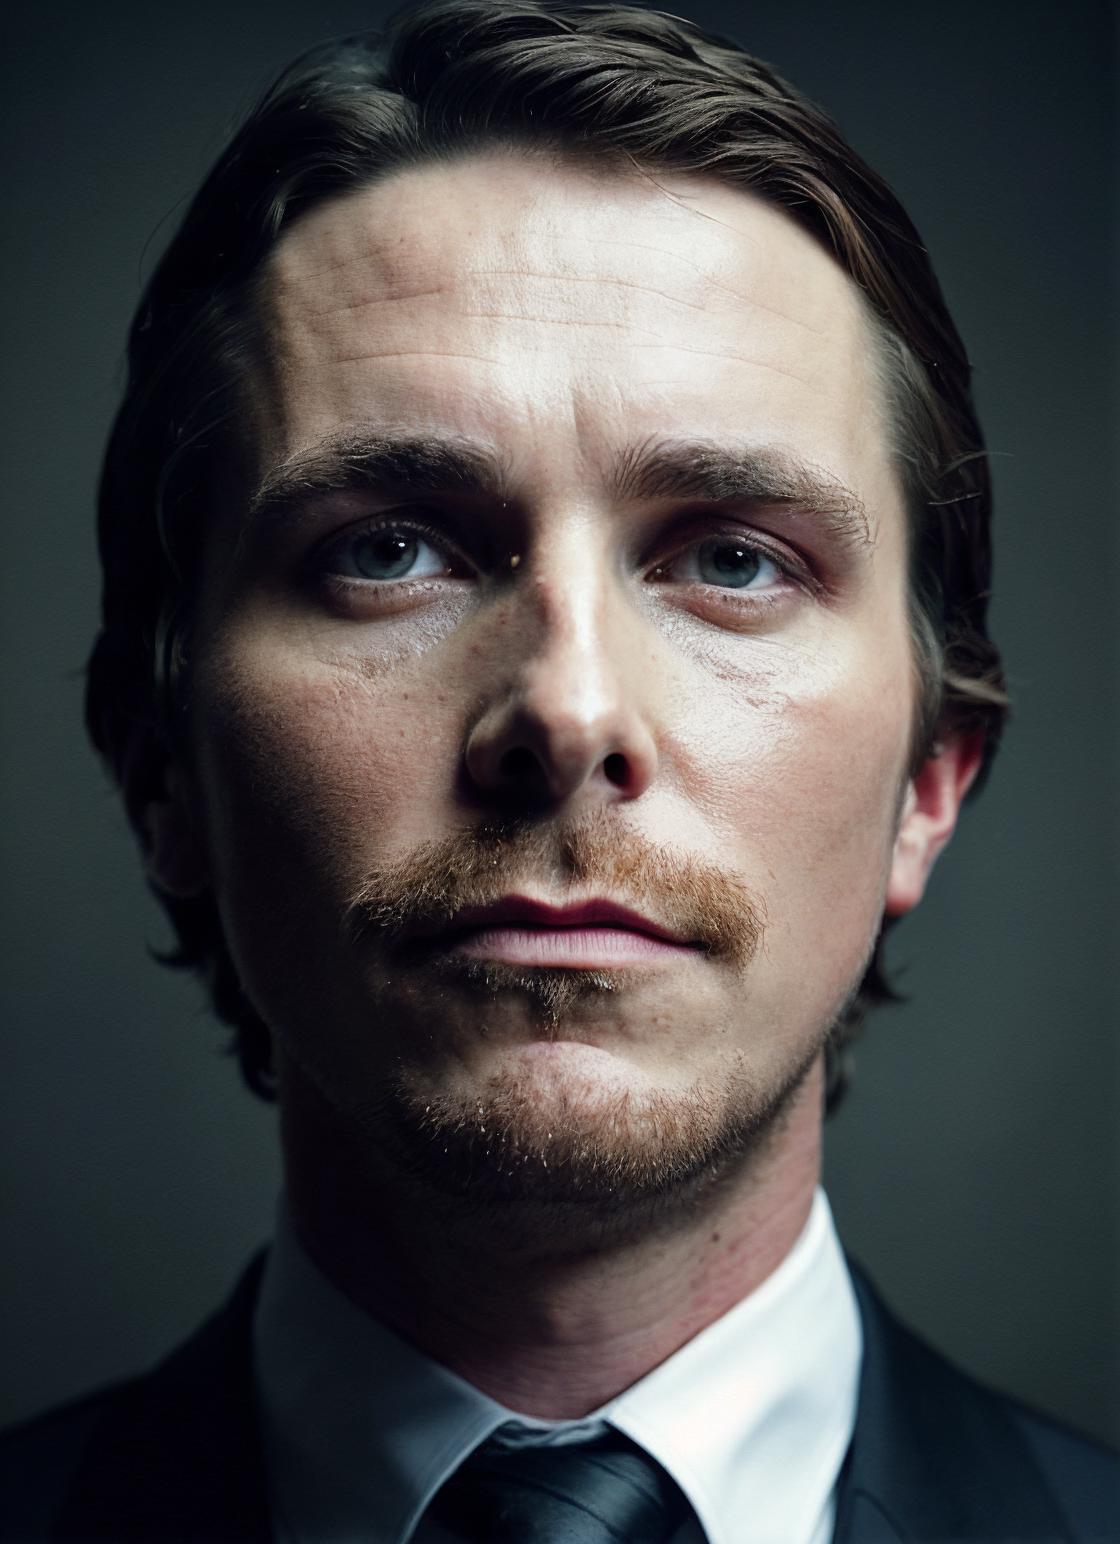 Christian Bale image by malcolmrey